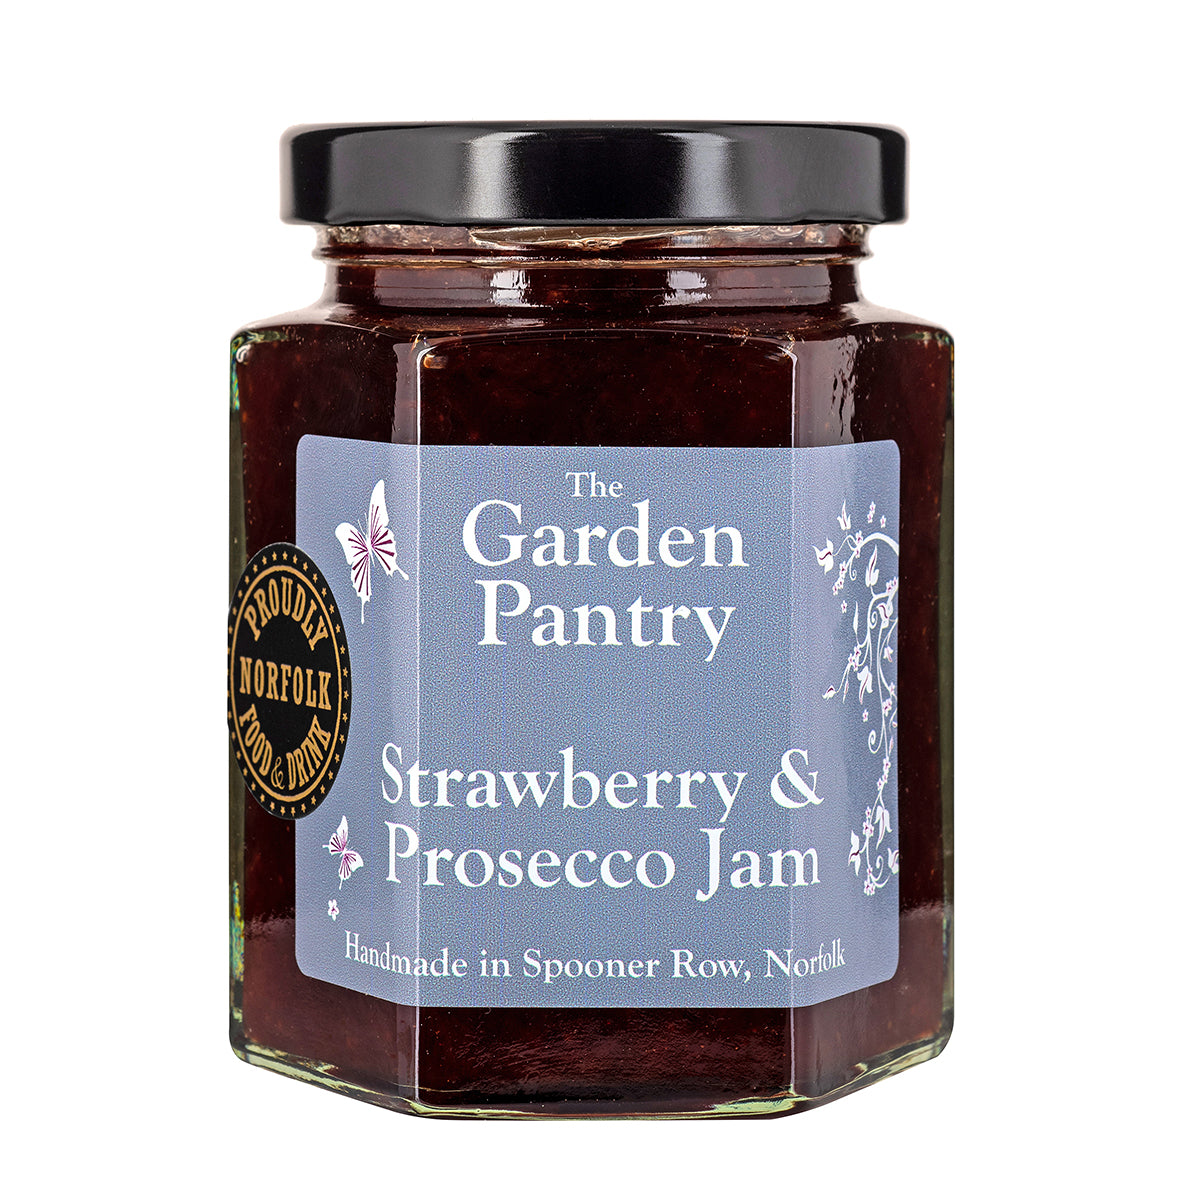 The Garden Pantry Strawberry & Prosecco Jam